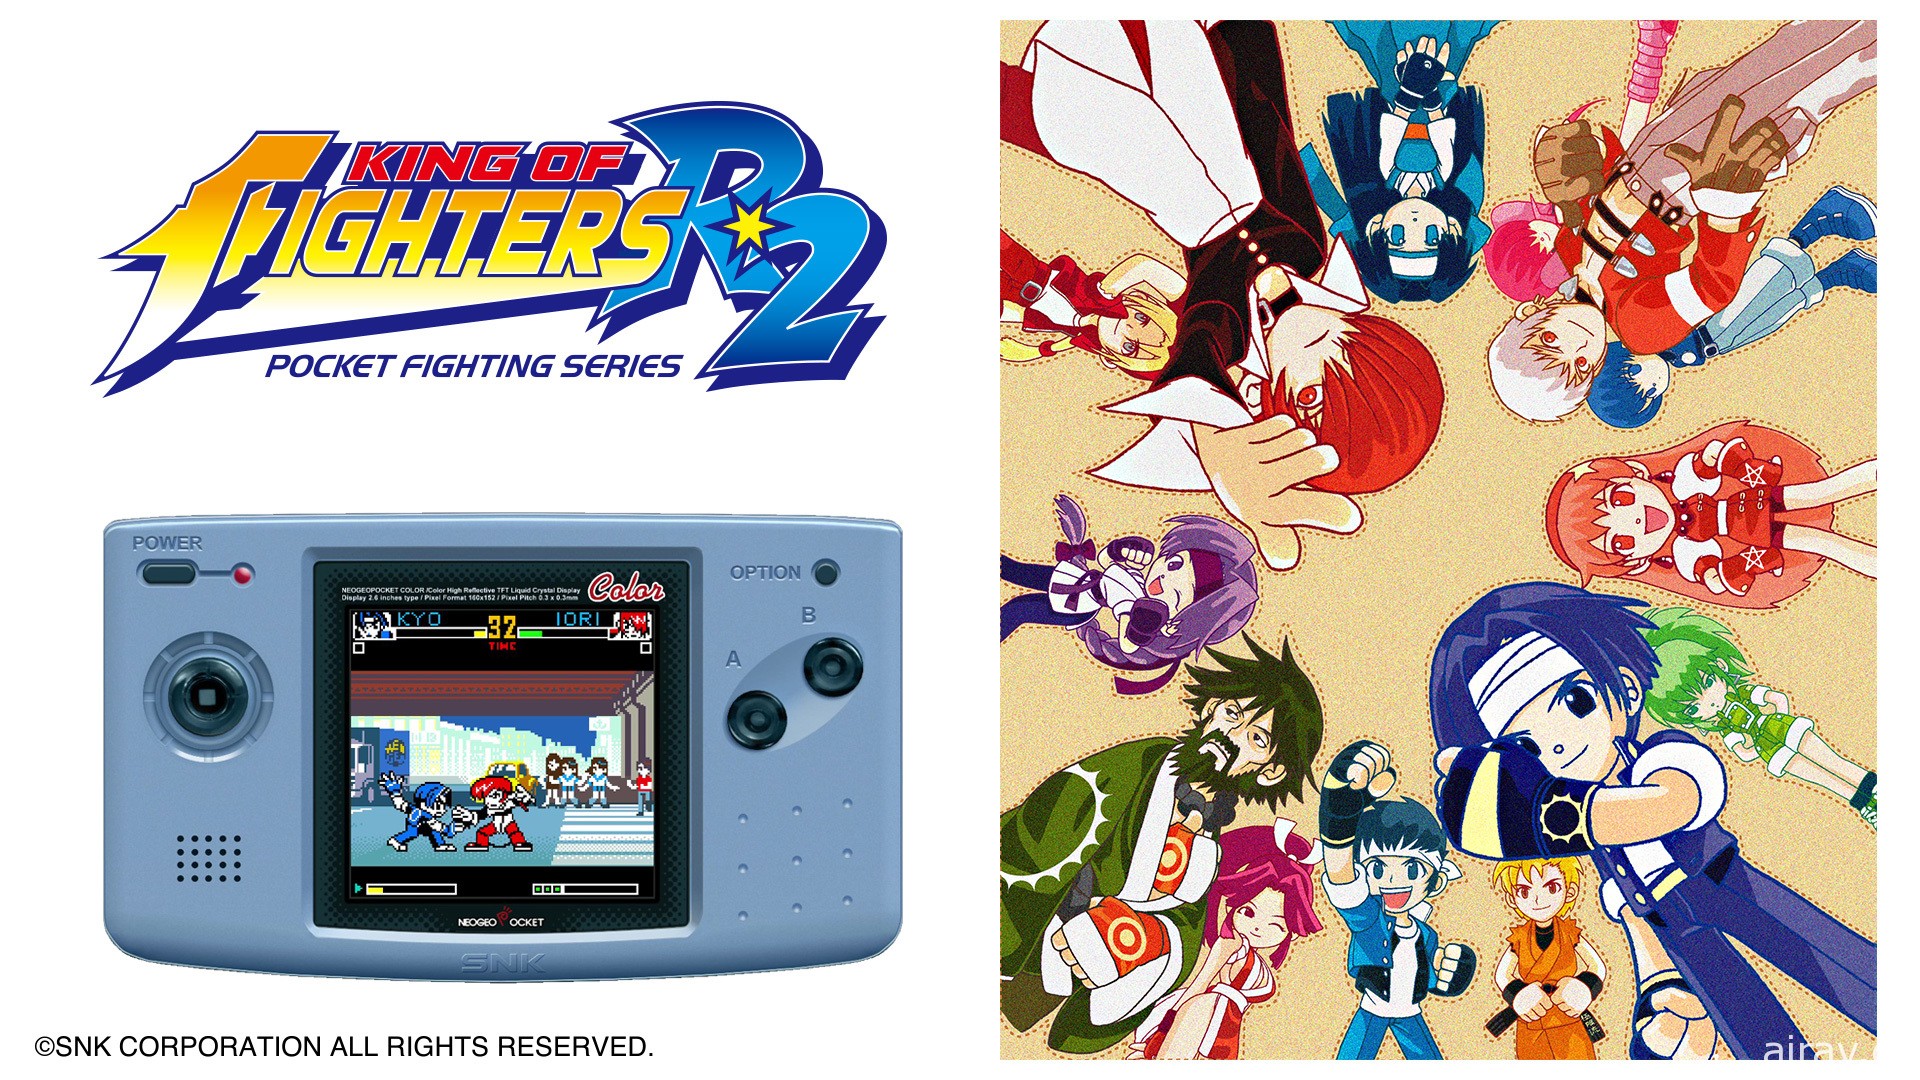 《Neo Geo Pocket Color Selection Vol.1》Switch 数位版今日抢先上市